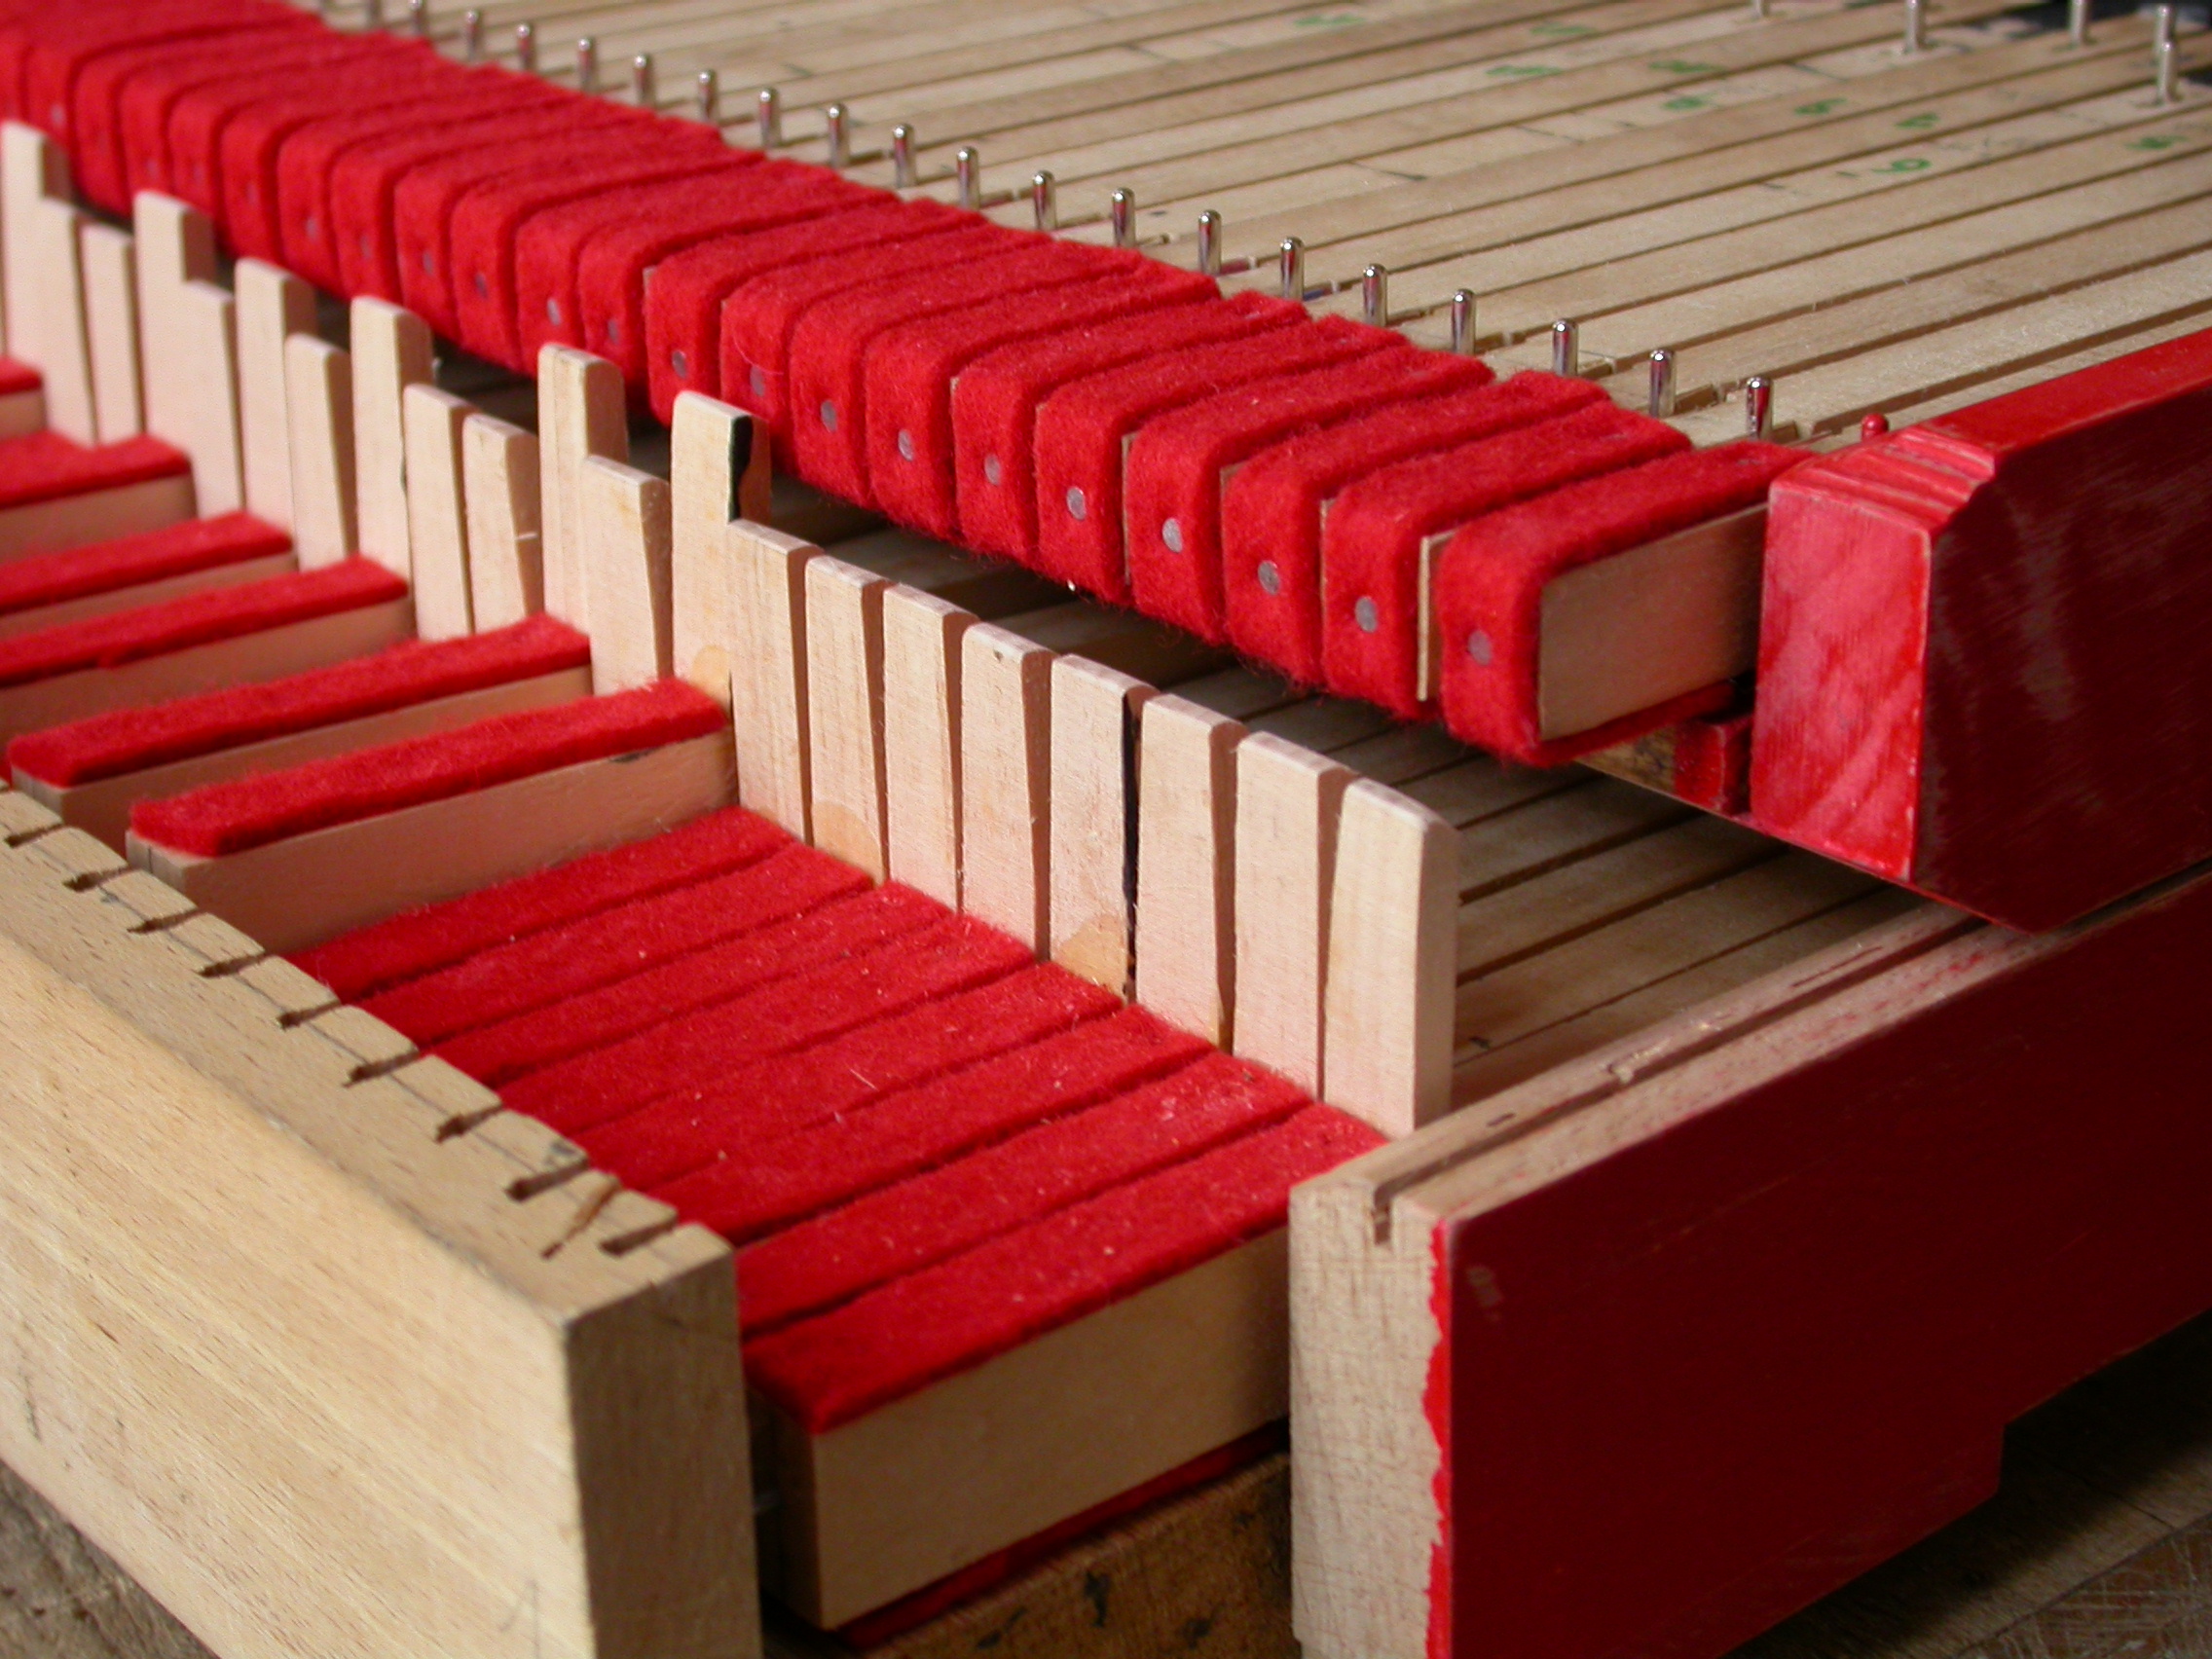 paul wood red piano harpsichord keys tones